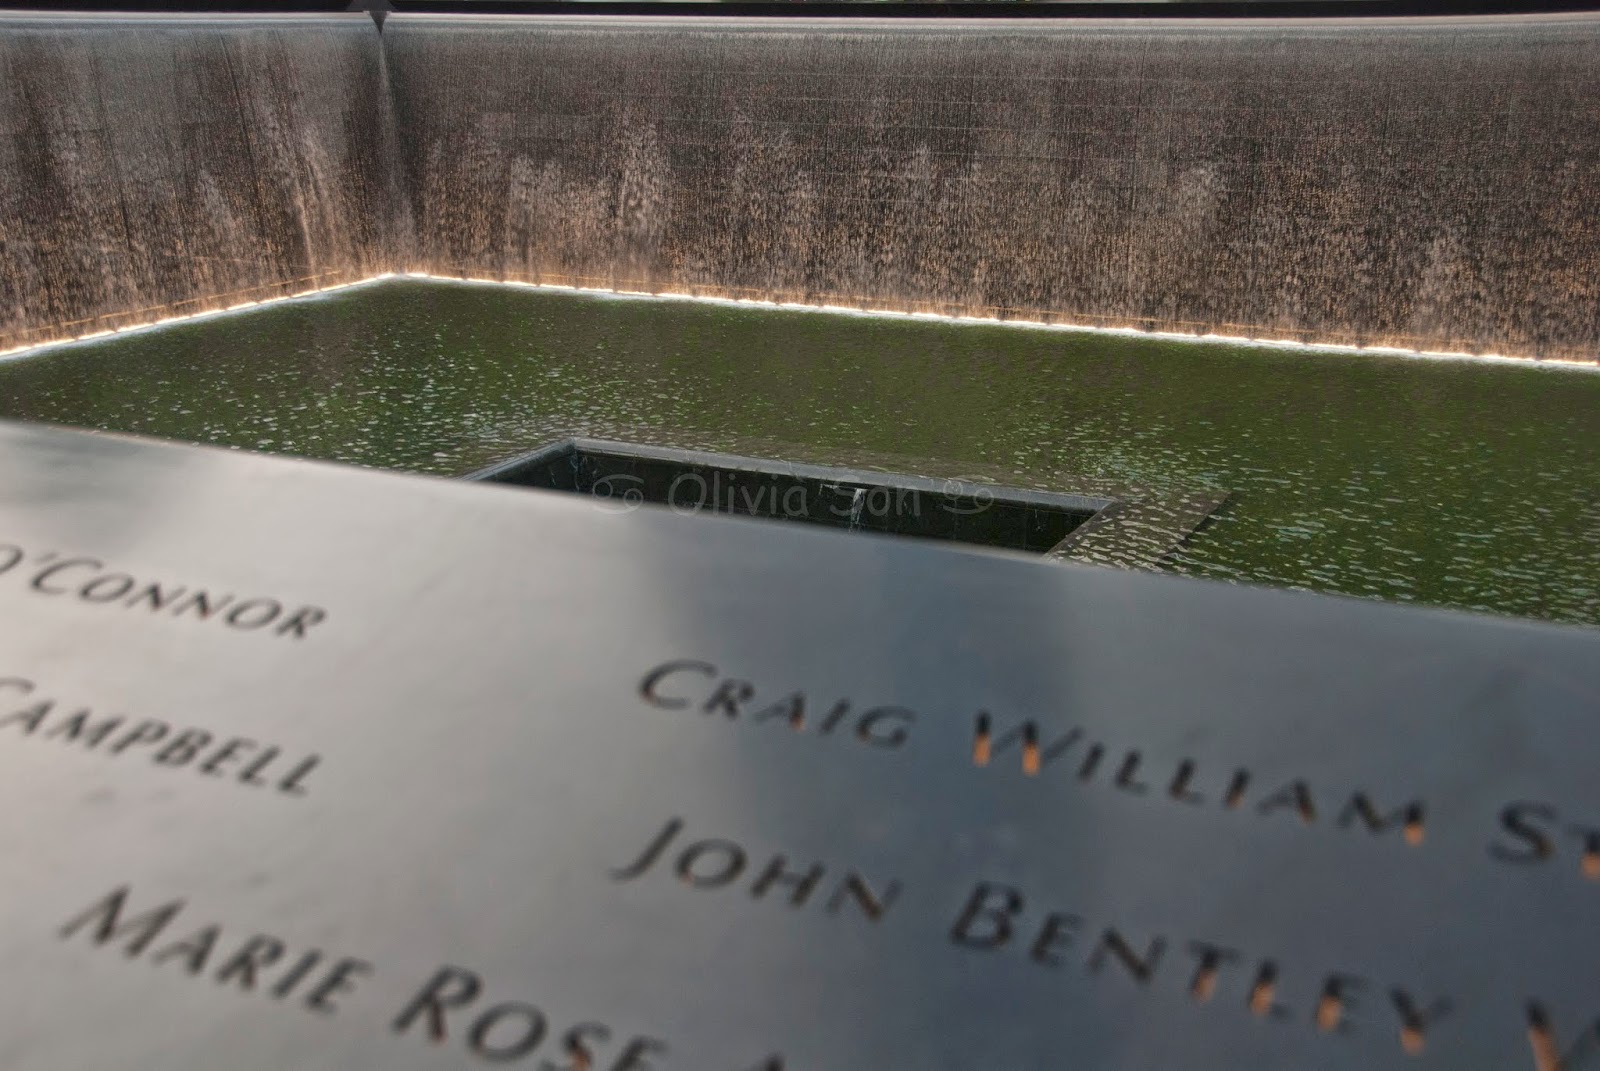 memorial 9/11 financial district, new york city, usa